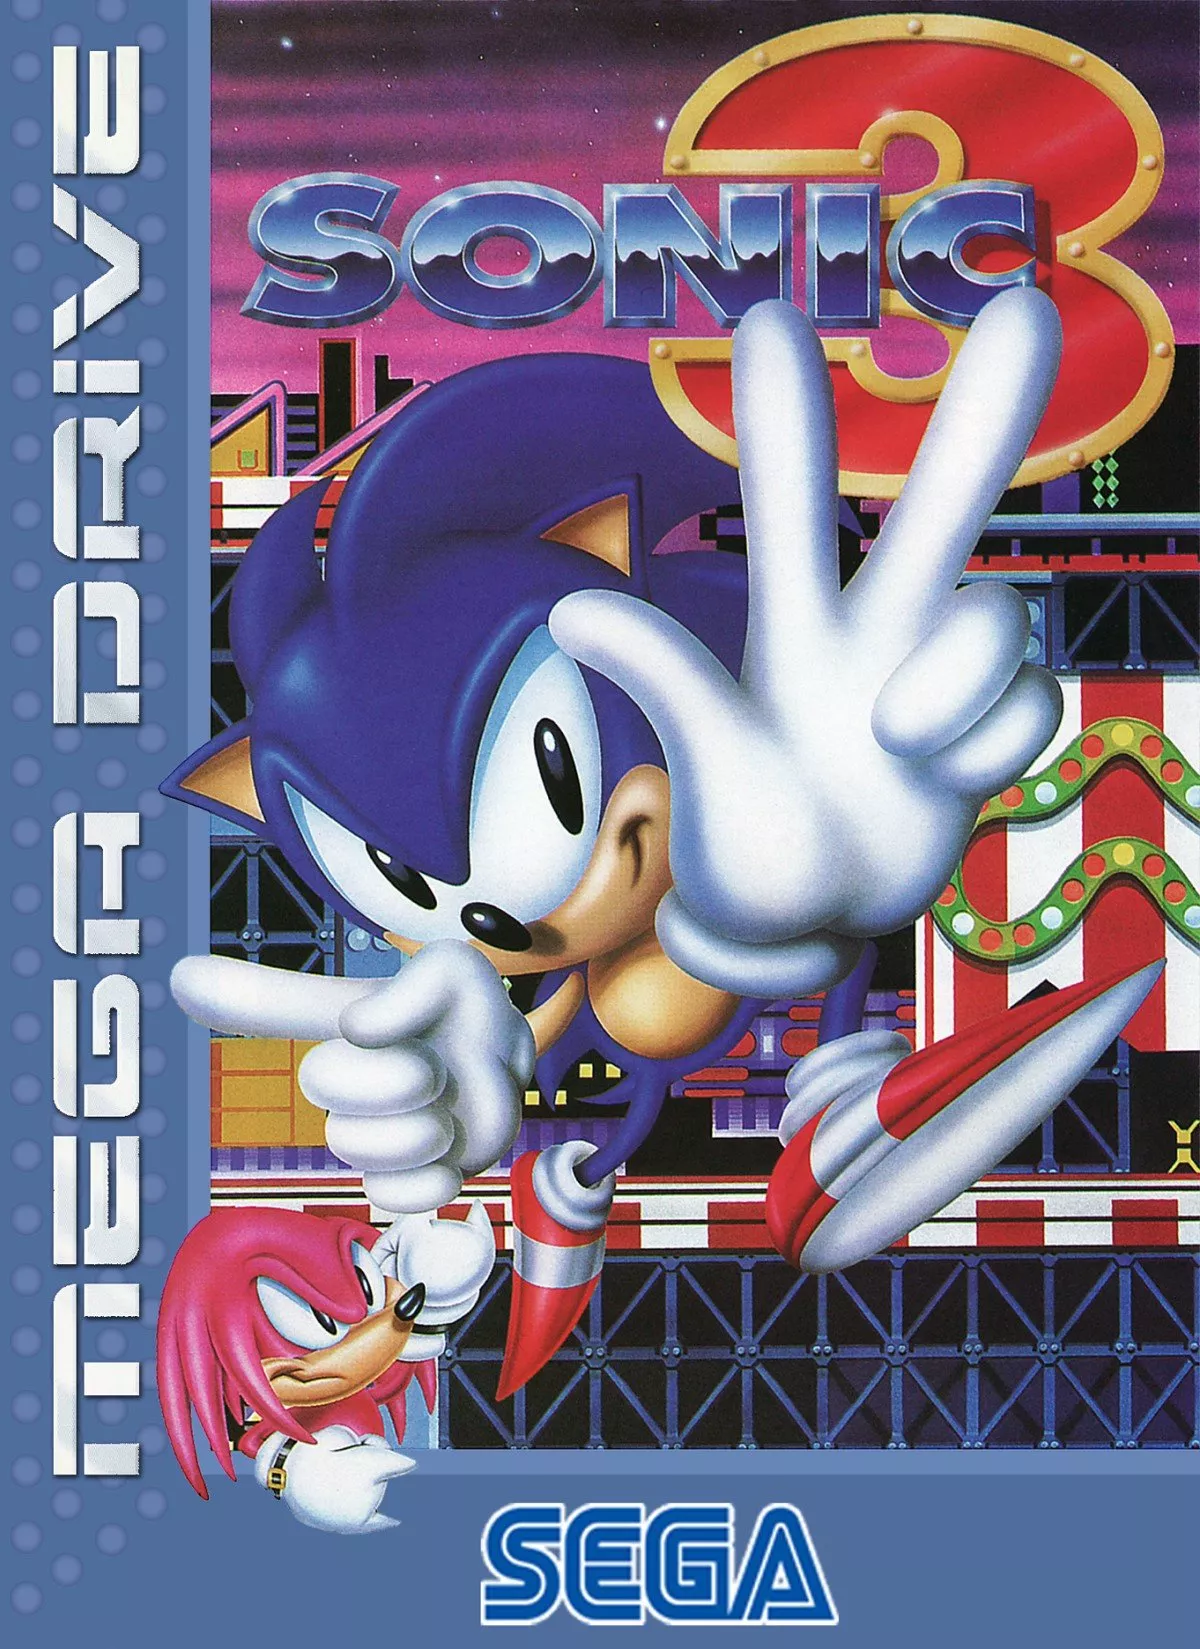 Sonic jp. Sonic 3 Sega Mega Drive. Обложка Sonic 3 Mega Drive. Соник 3 игра сега. Sega Mega Drive 2 Sonic 3.